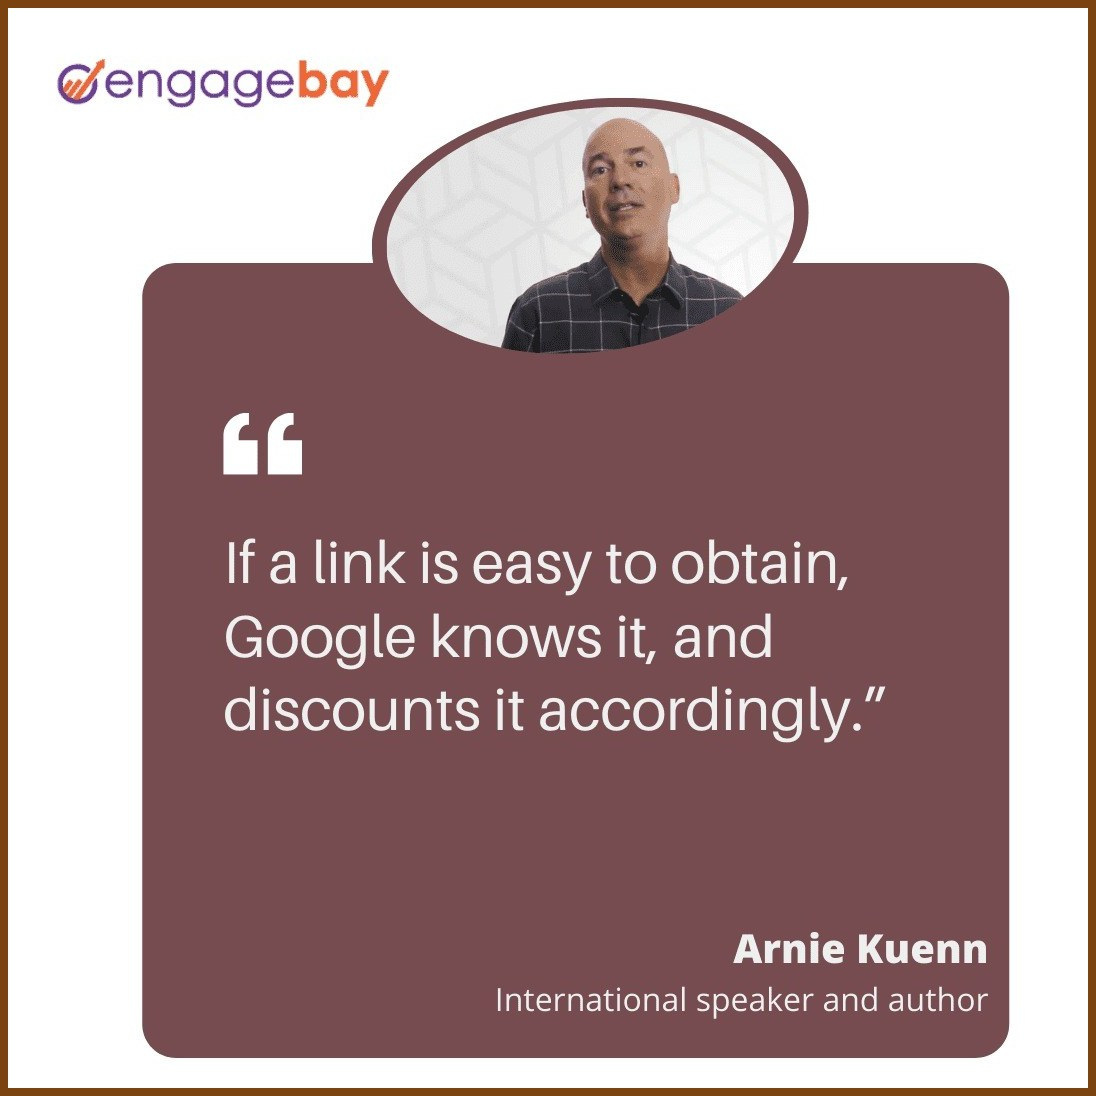 content marketing quote by Arnie Kuenn